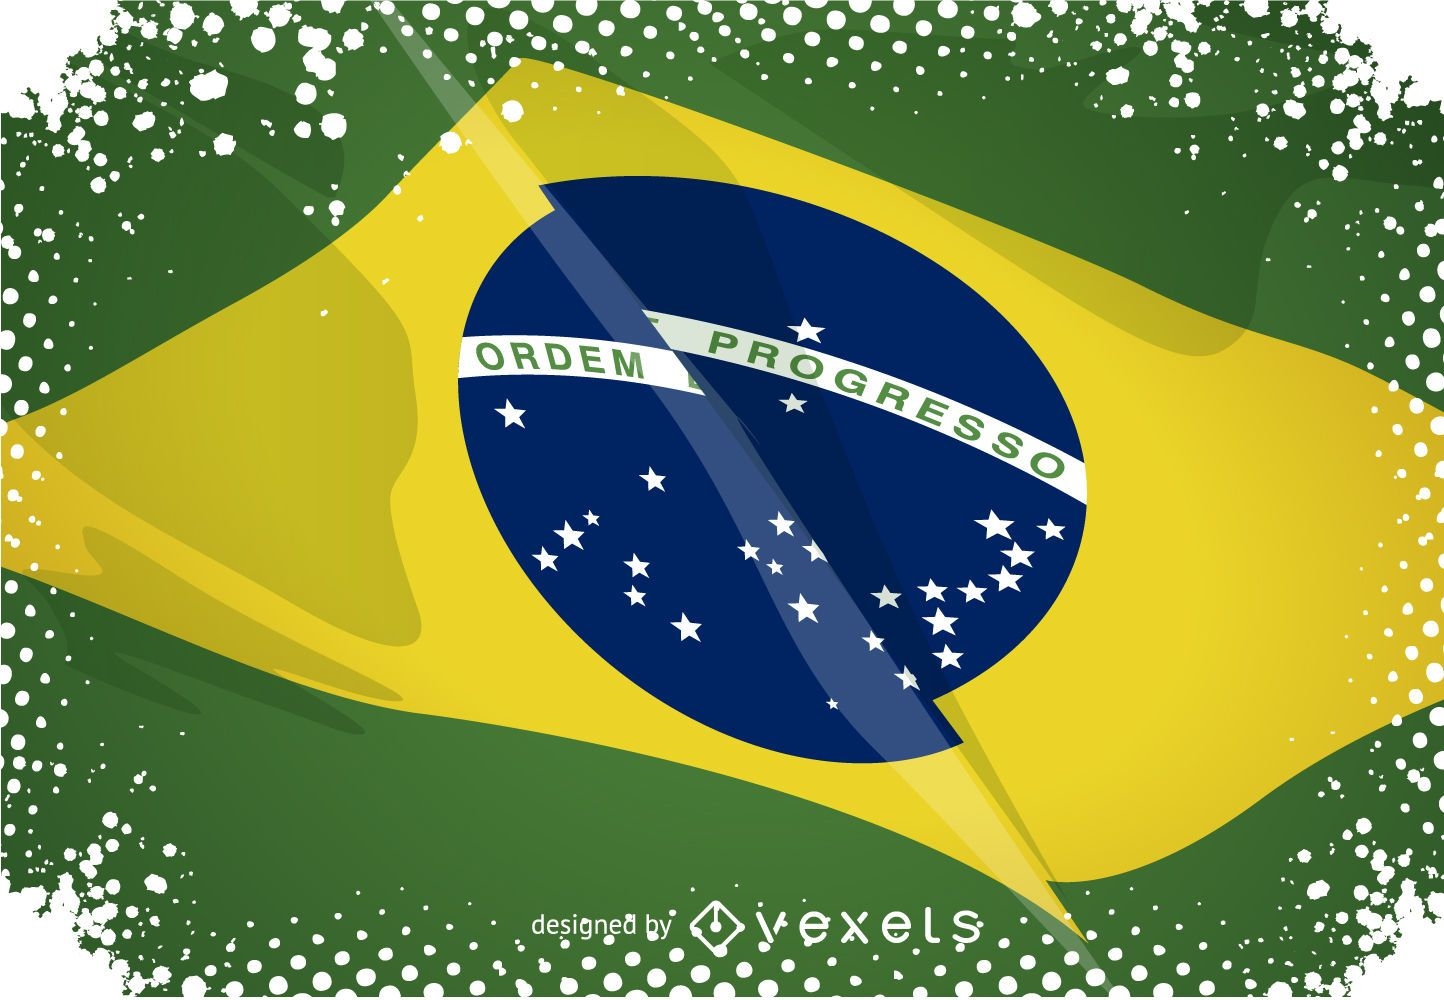 Rio 2016 over Brazil flag